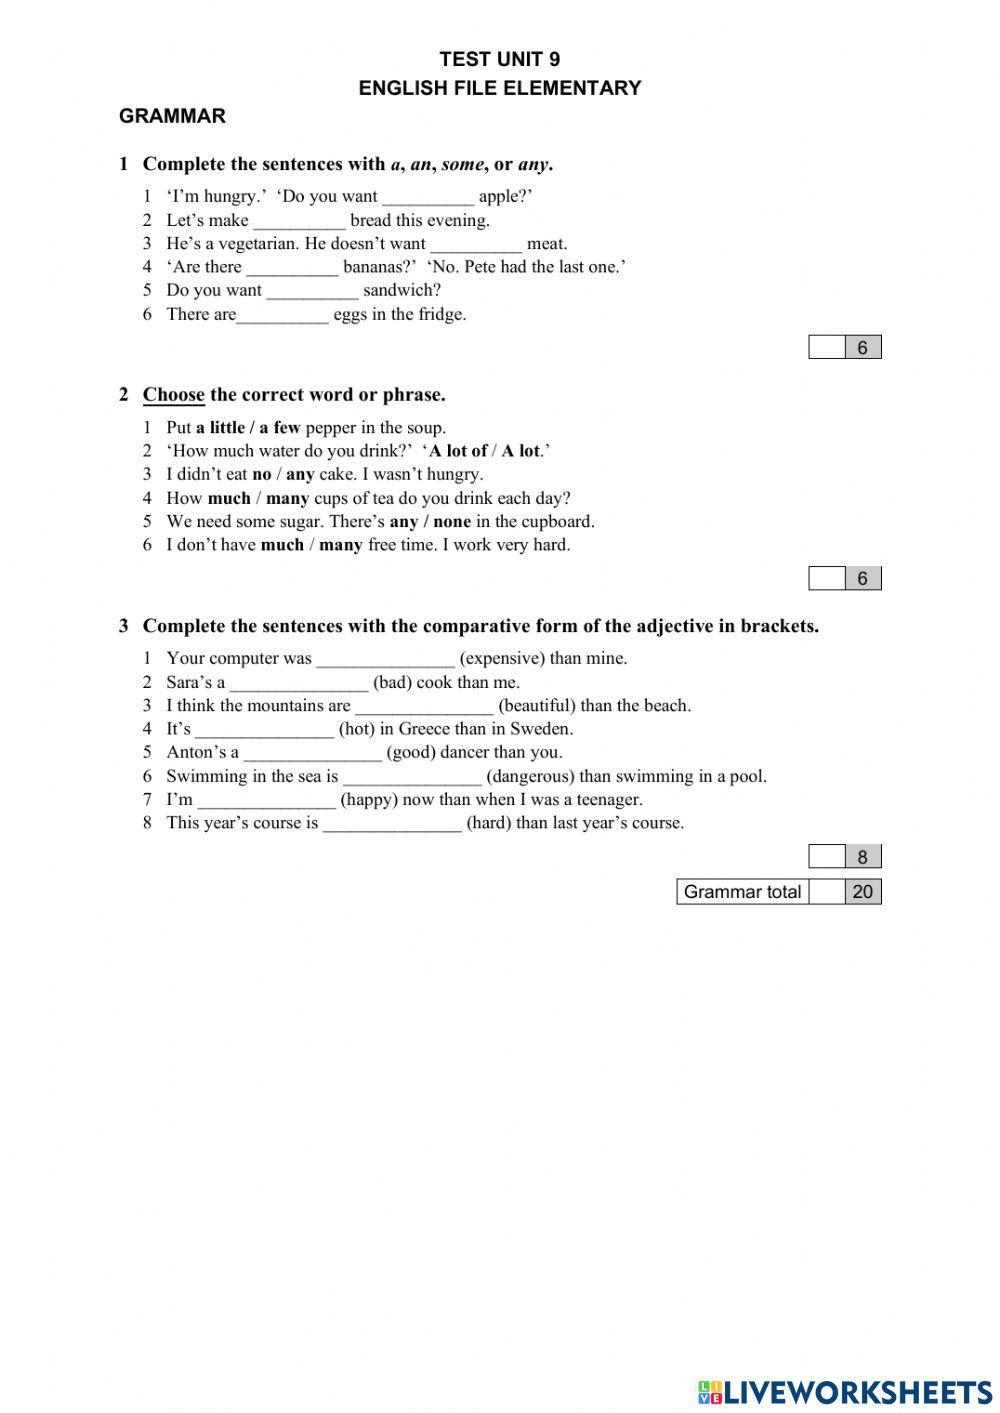 Grammat test unit 9 english file elementary